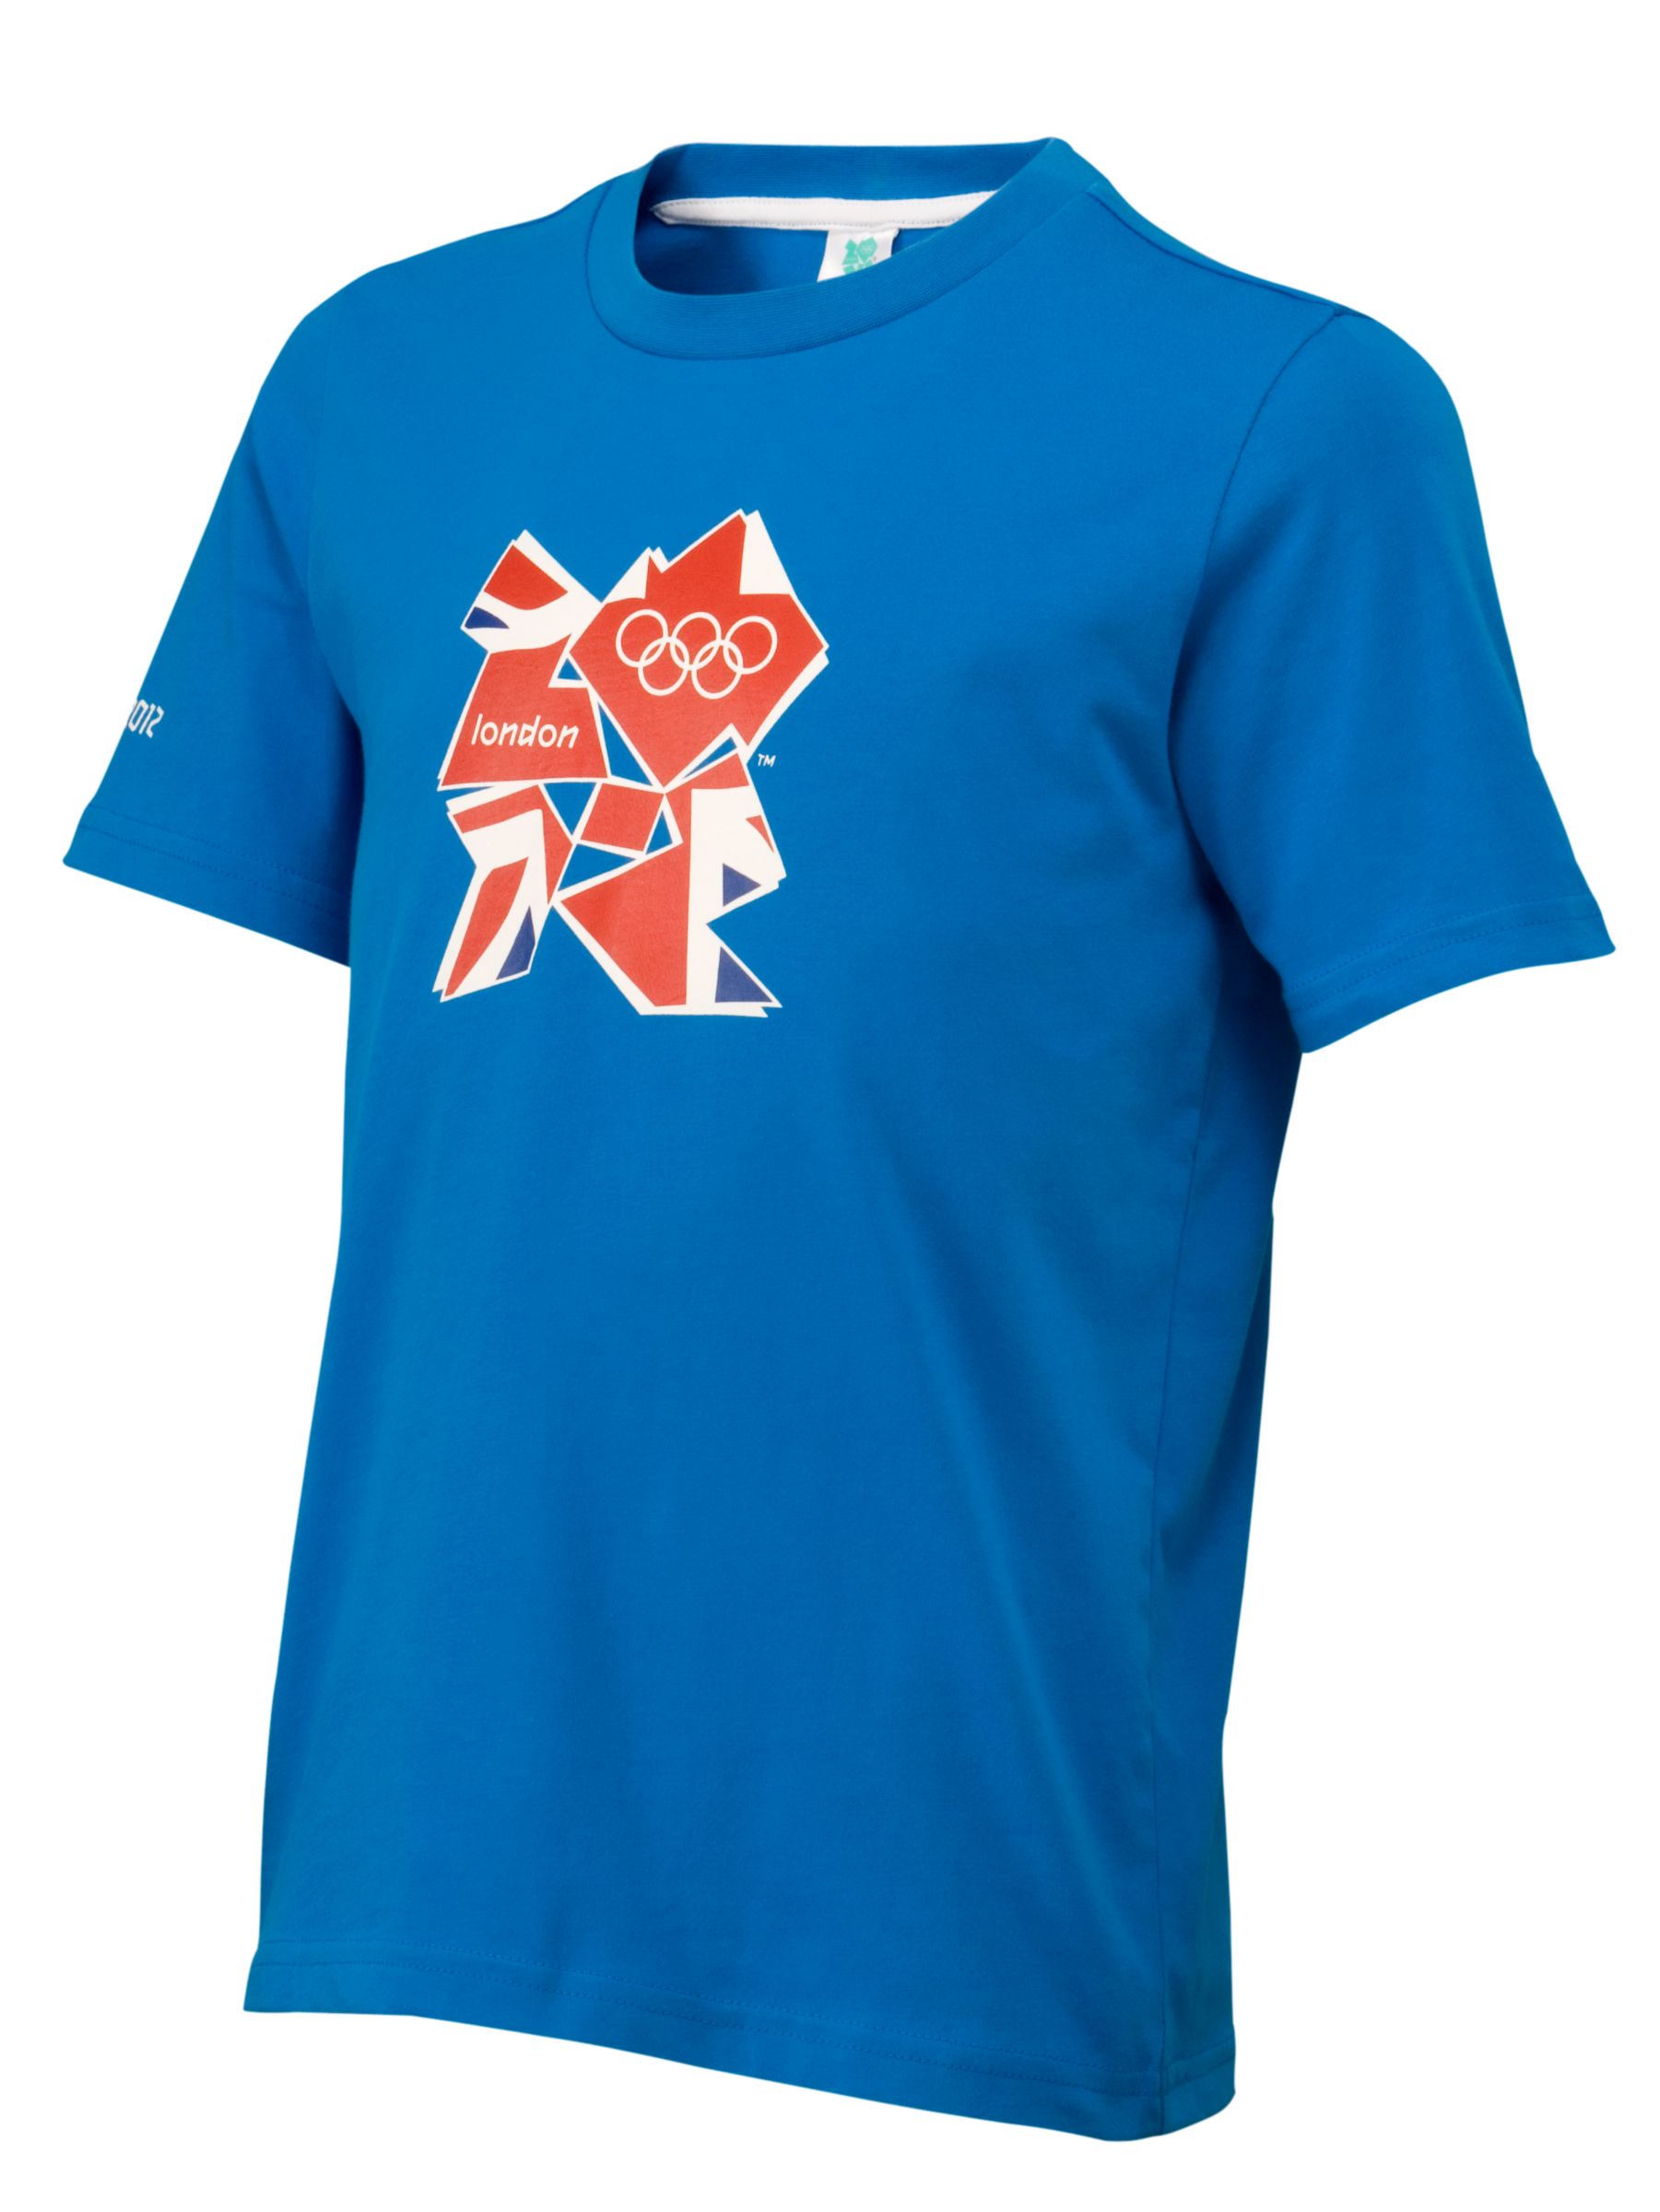 London 2012 Union Jack T-Shirt, Pool Blue